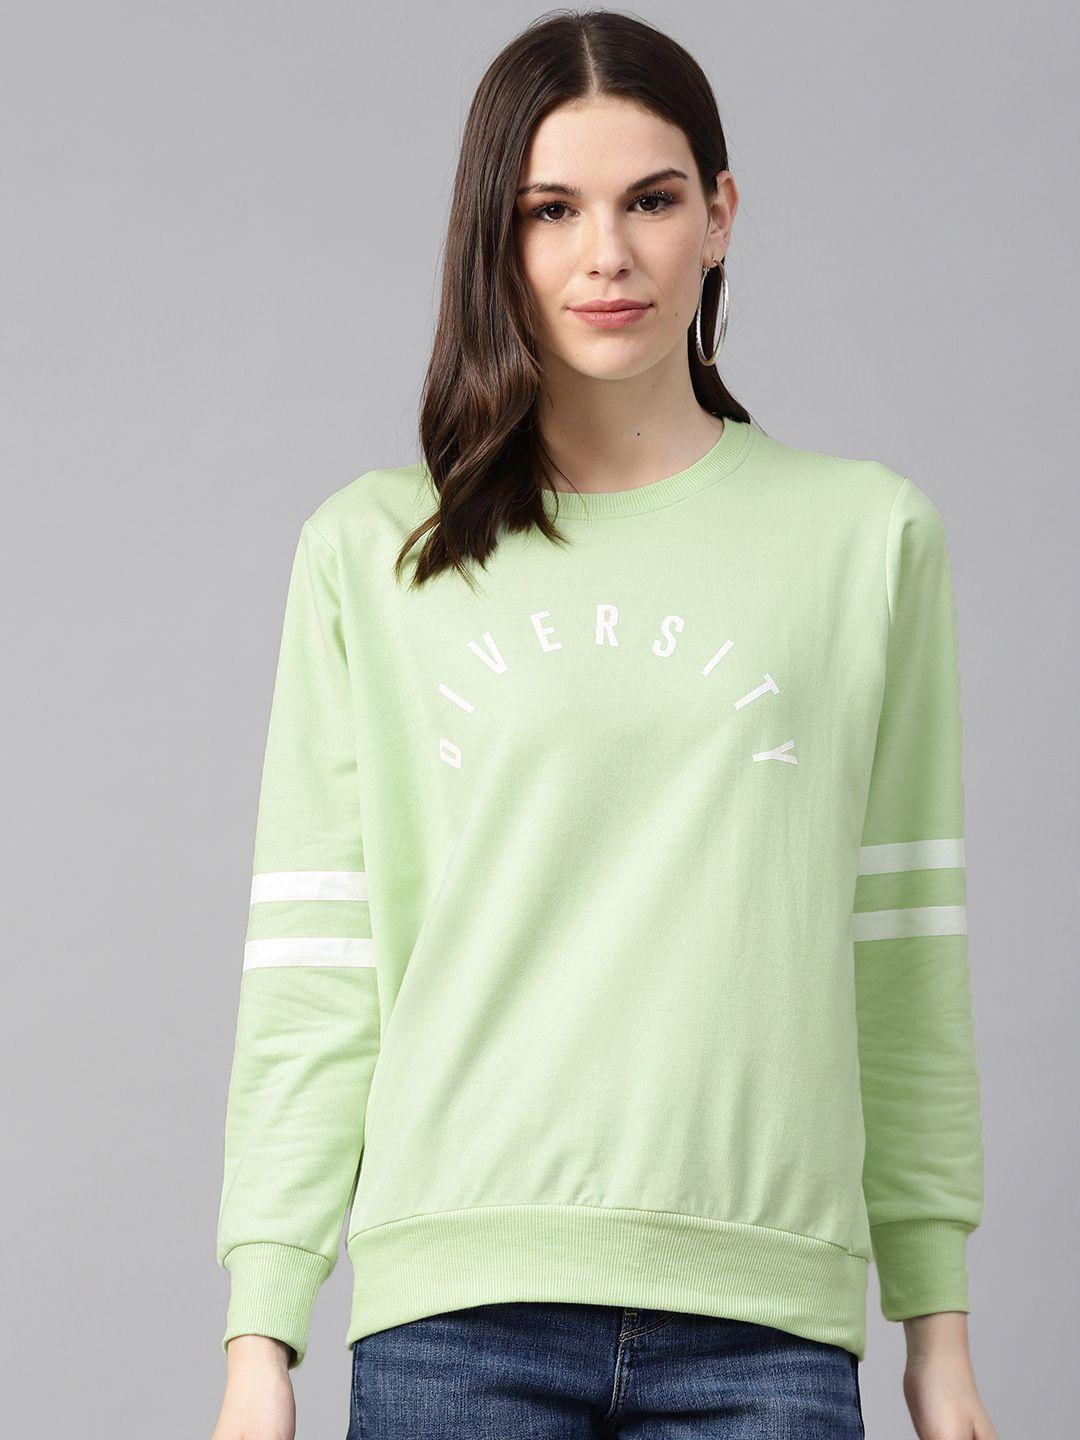 pluss-women-lime-green-&-white-printed-sweatshirt